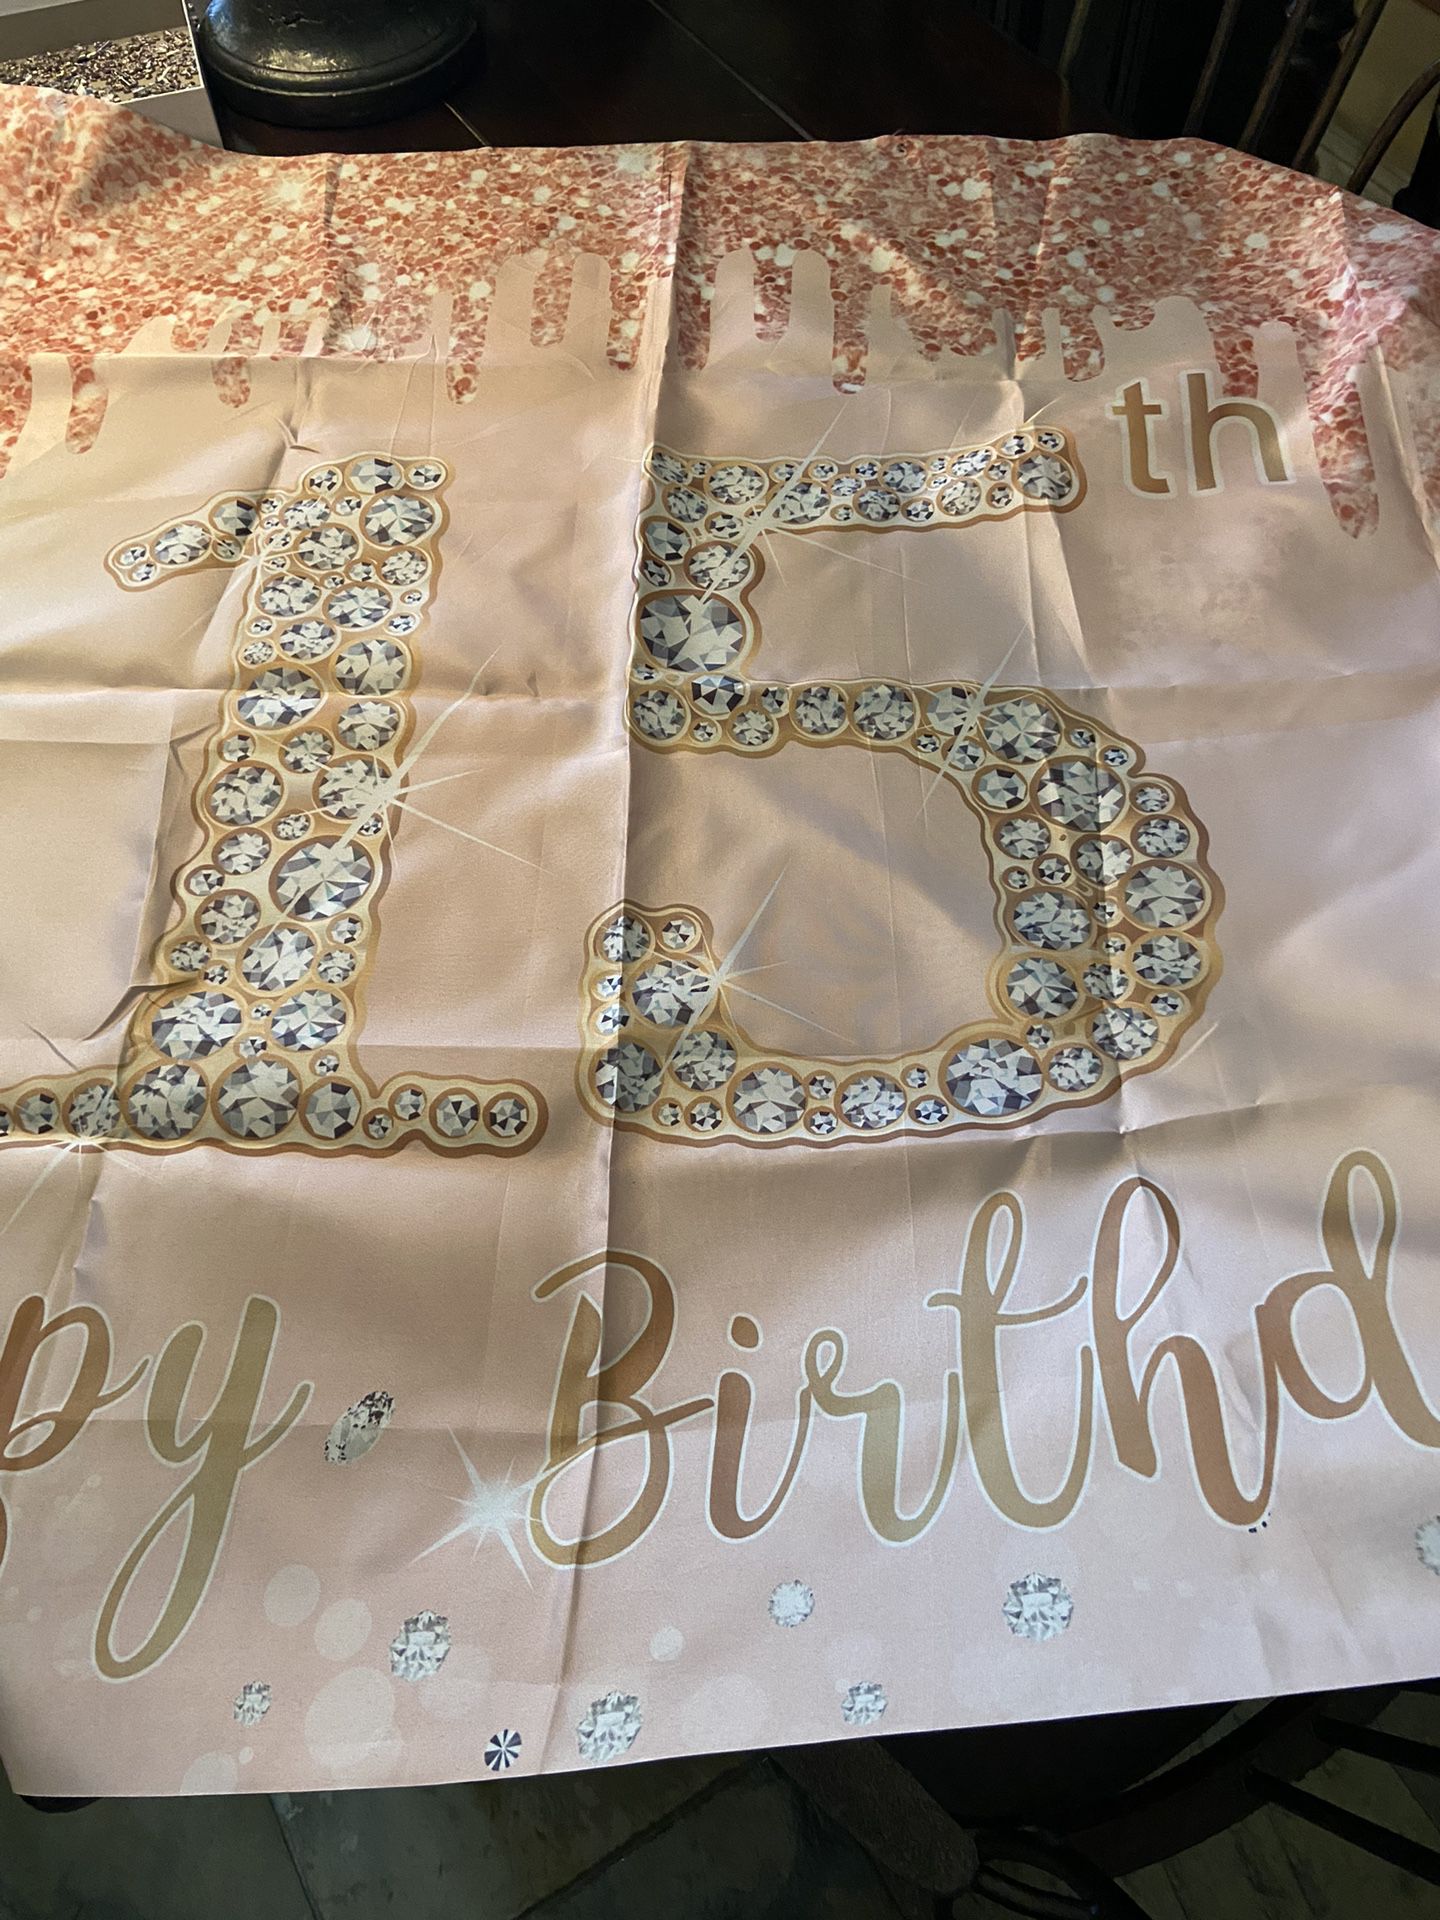 15th birthday banner